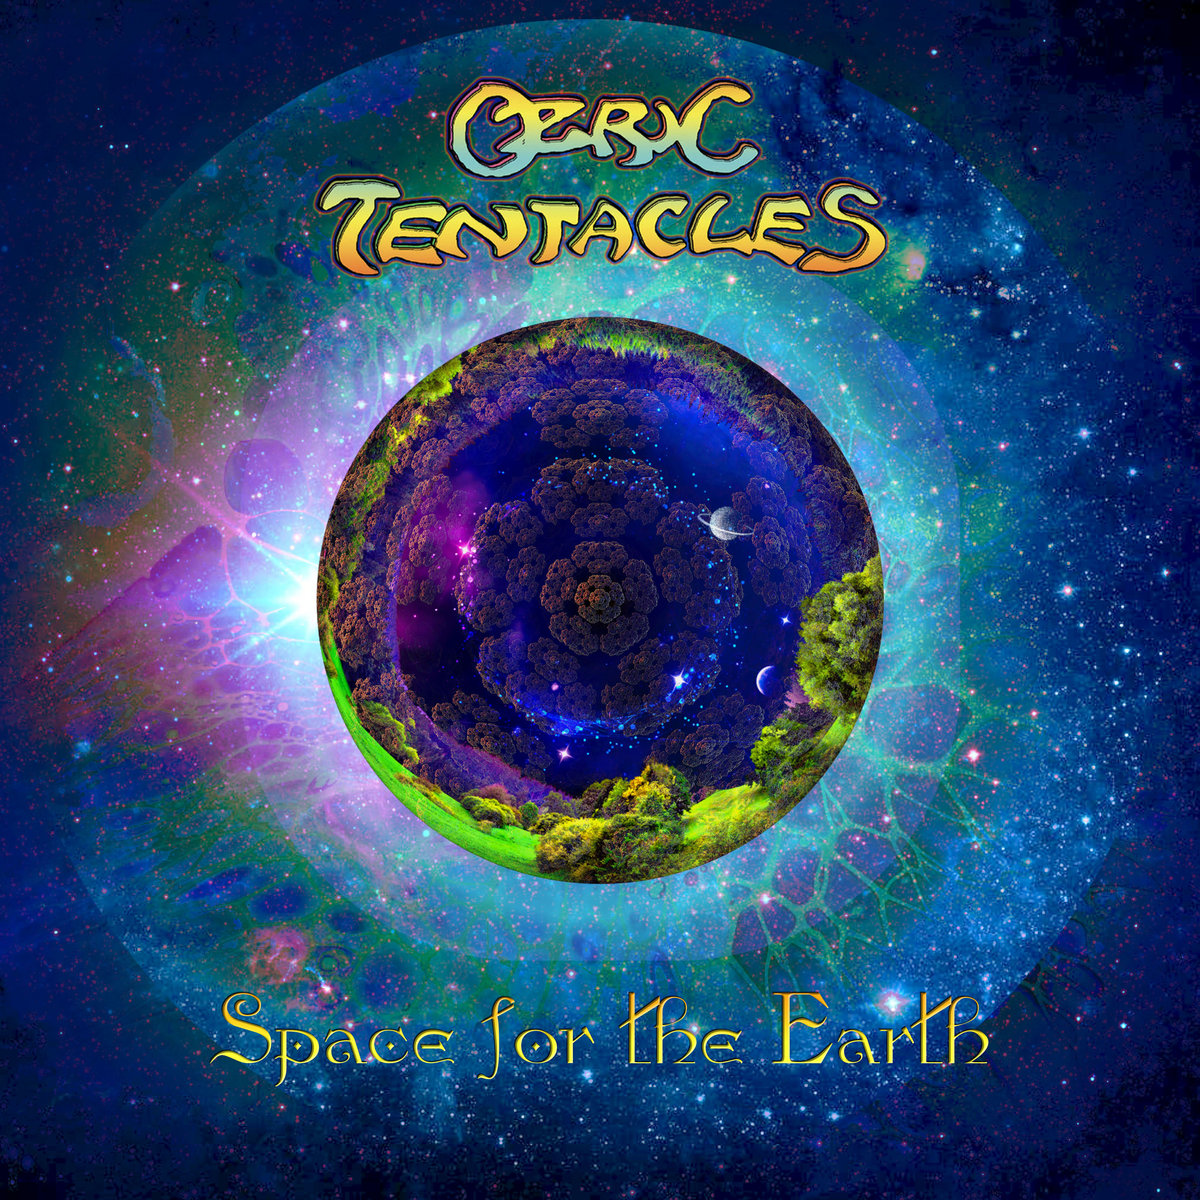 ozric tentacles 20 CD